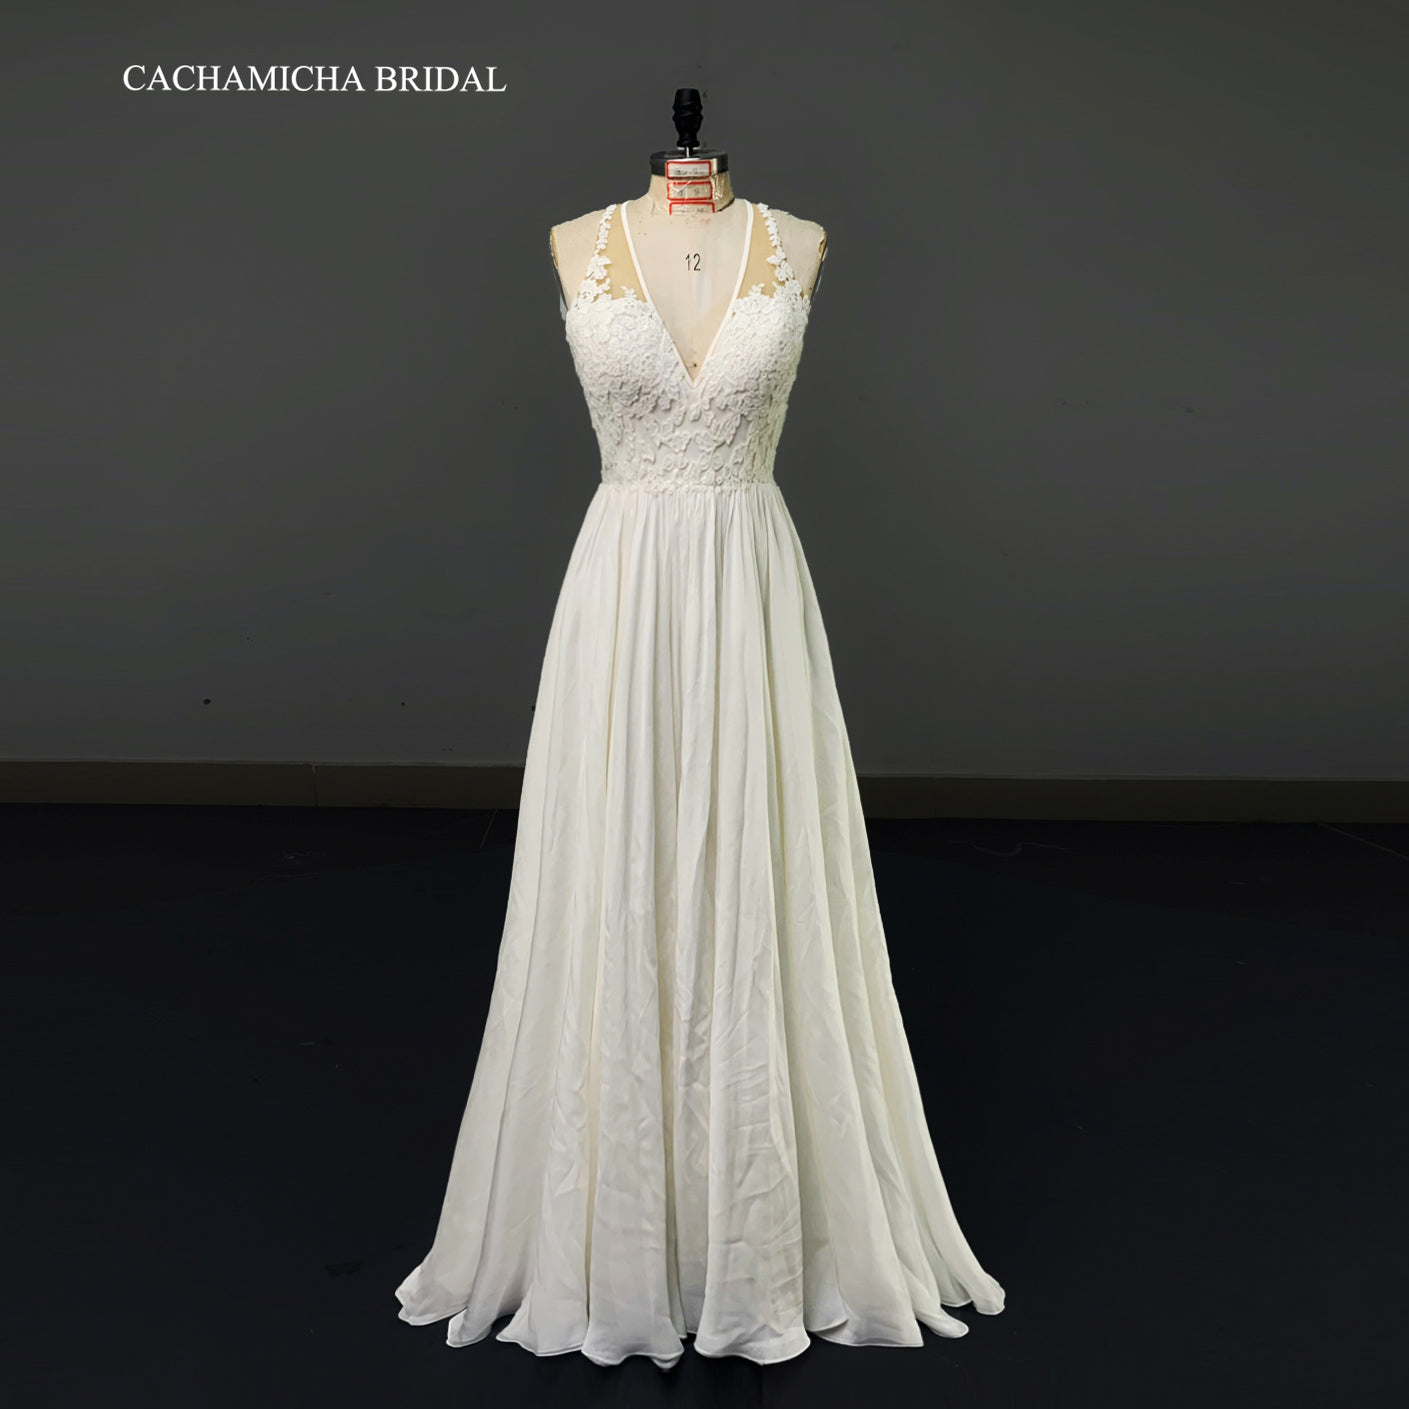 Bohemia Halter Neck Lace Top Chiffon Bridal Dress 7186